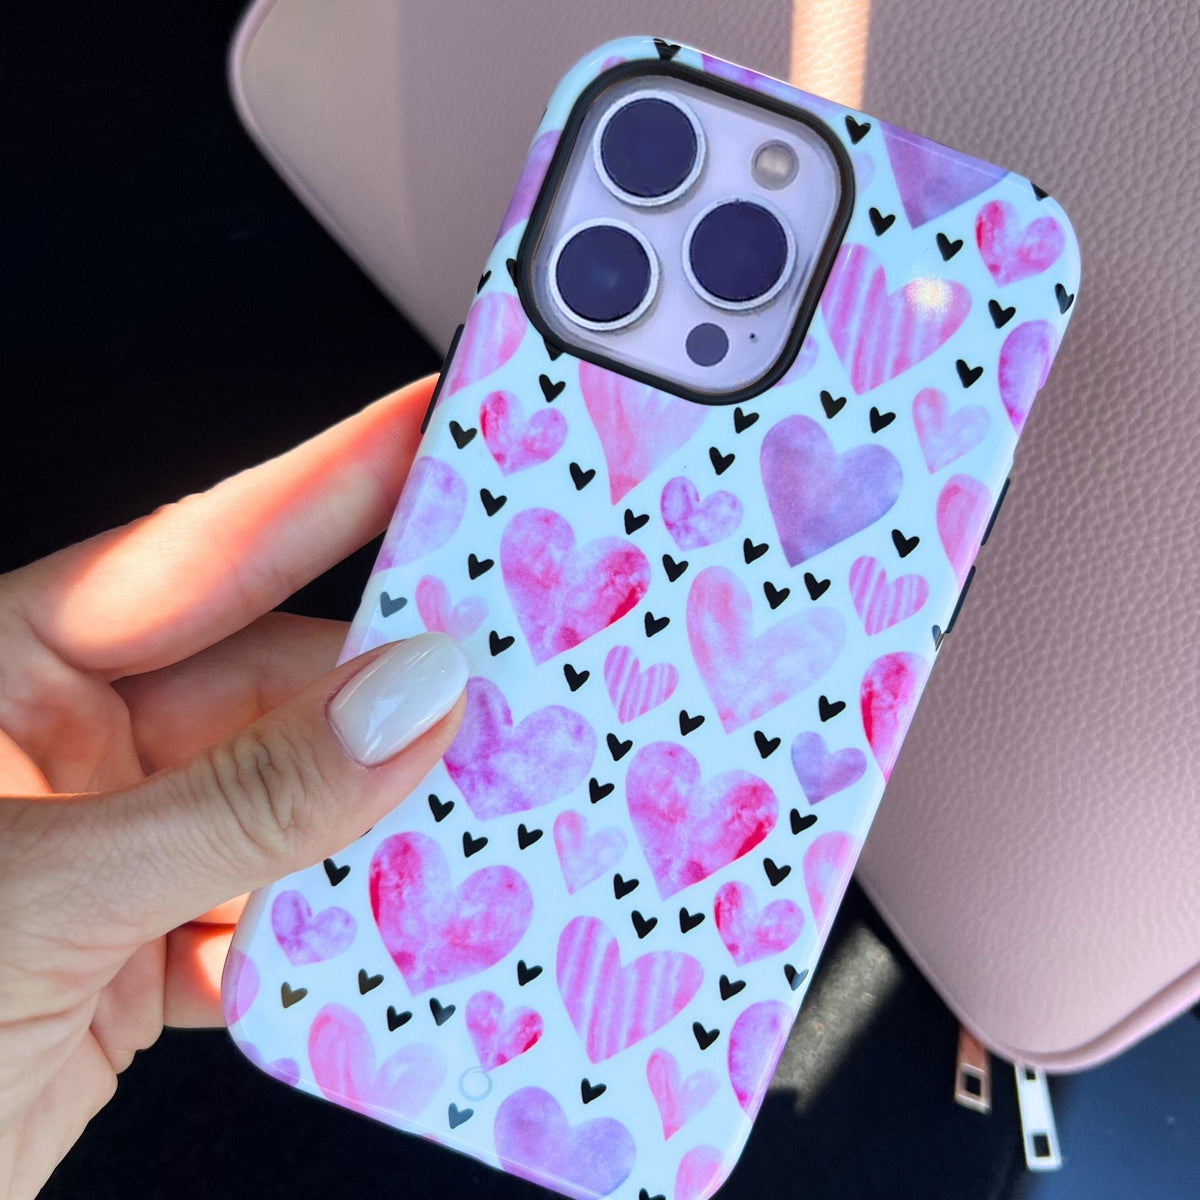 Blushing Hearts iPhone Case - iPhone 11